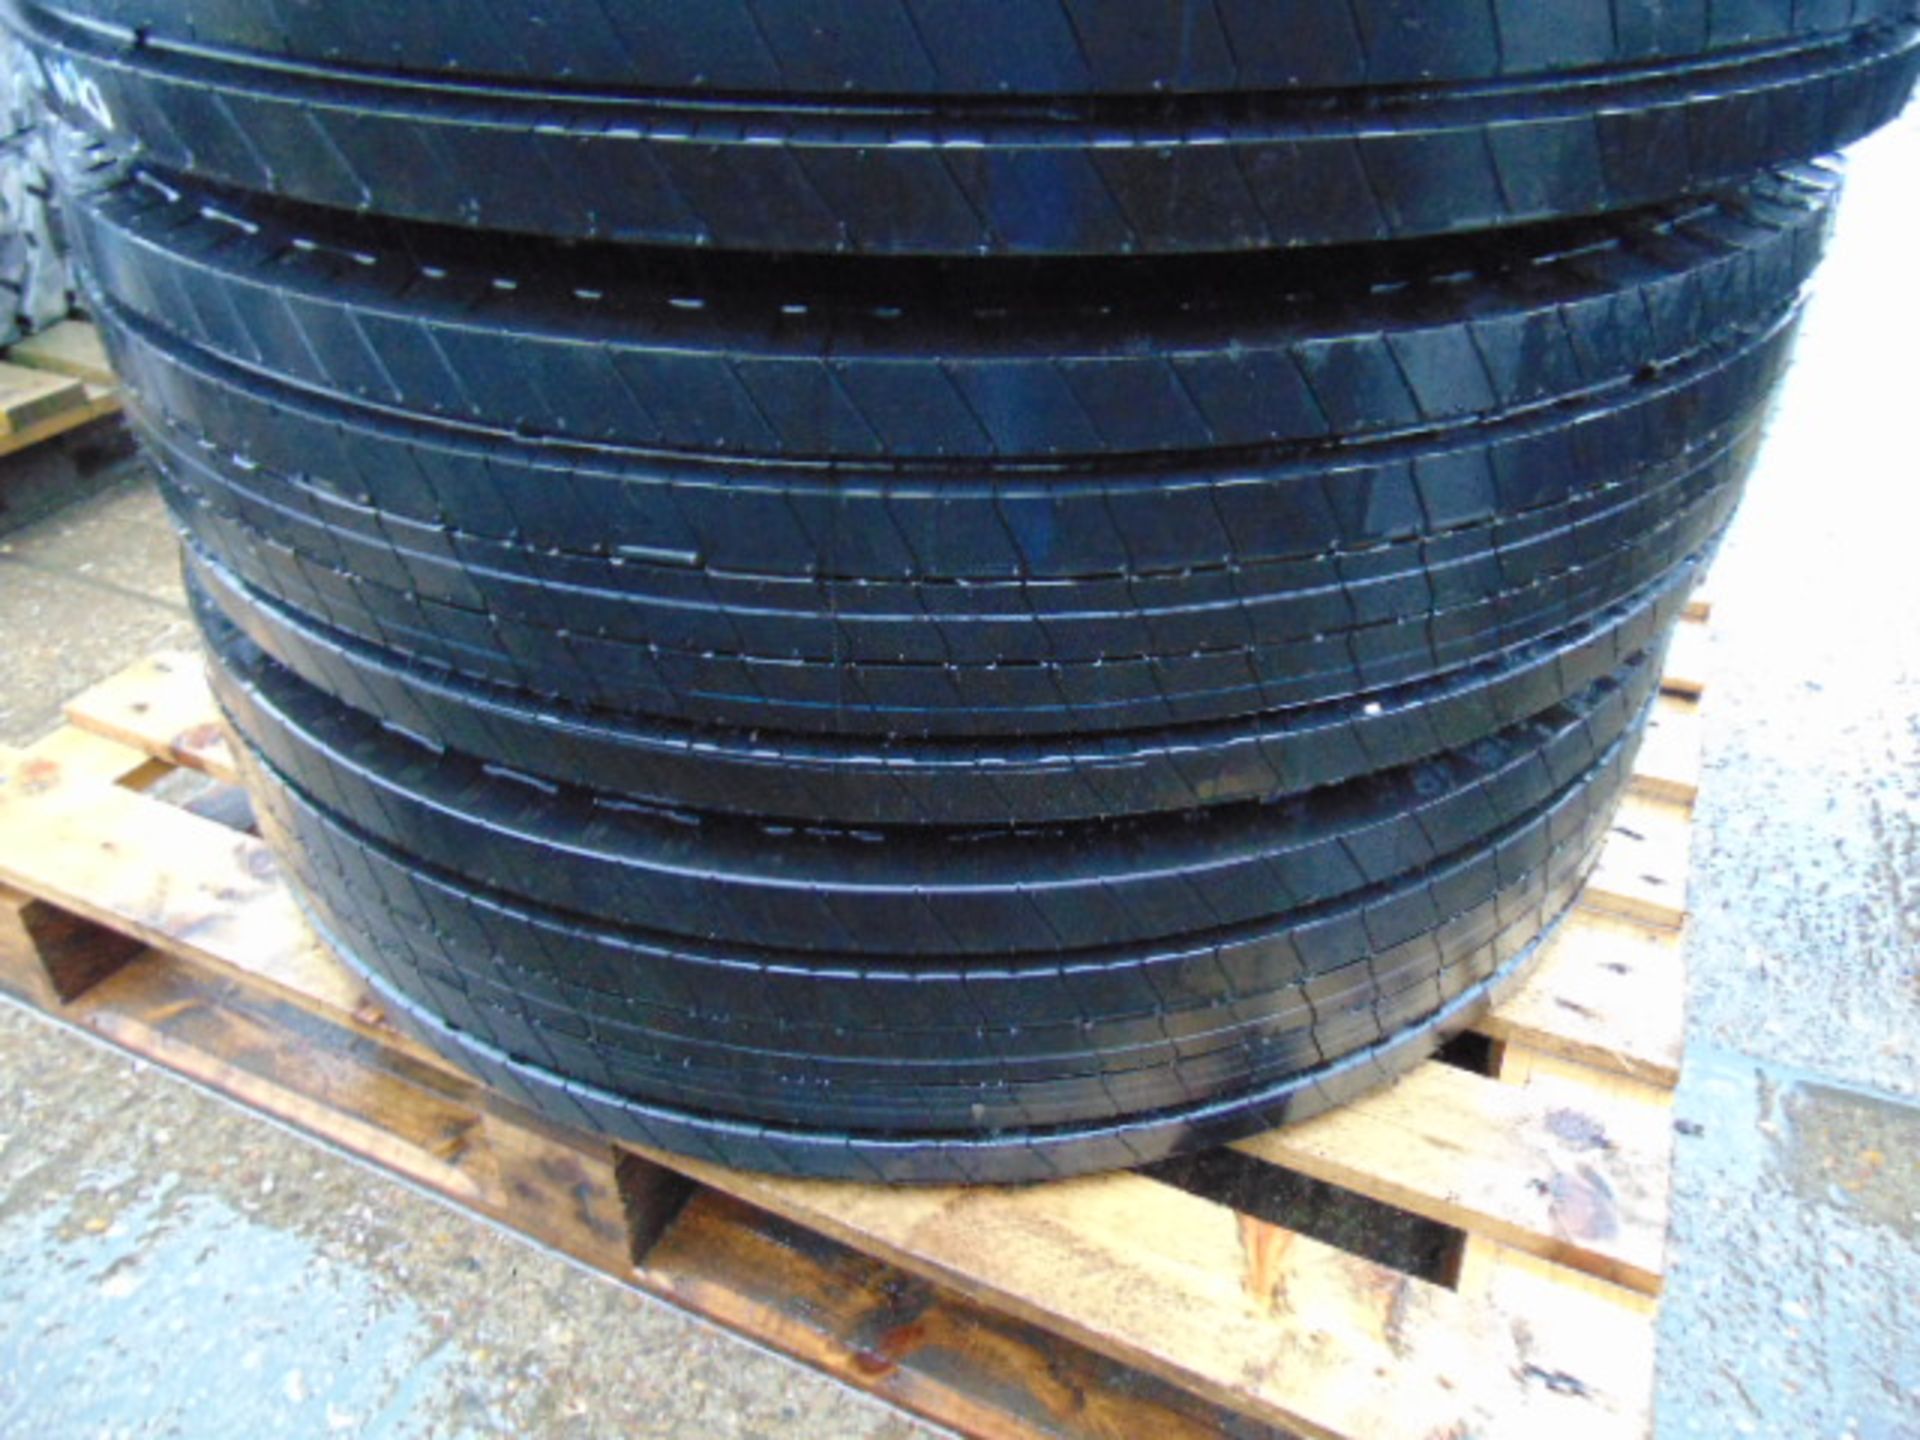 4 x 11R 22.5 Goodyear Marathon LHT Tyres Unused - Image 3 of 7